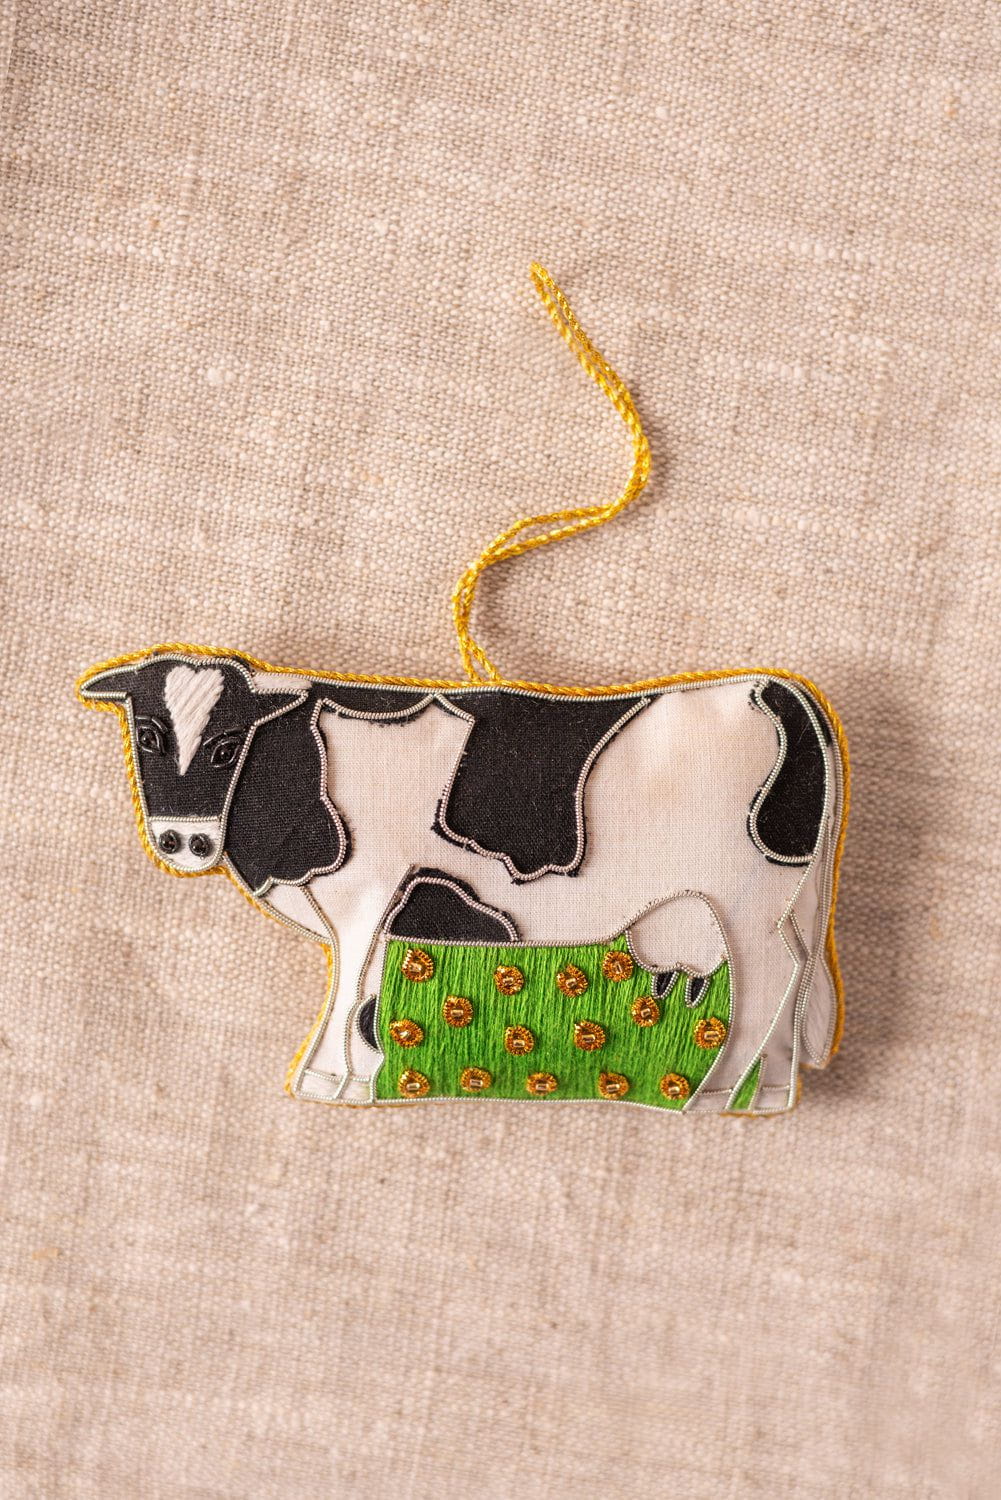 Ian Snow Ltd Dairy Cow Decoration (Virgin Plastic Free)